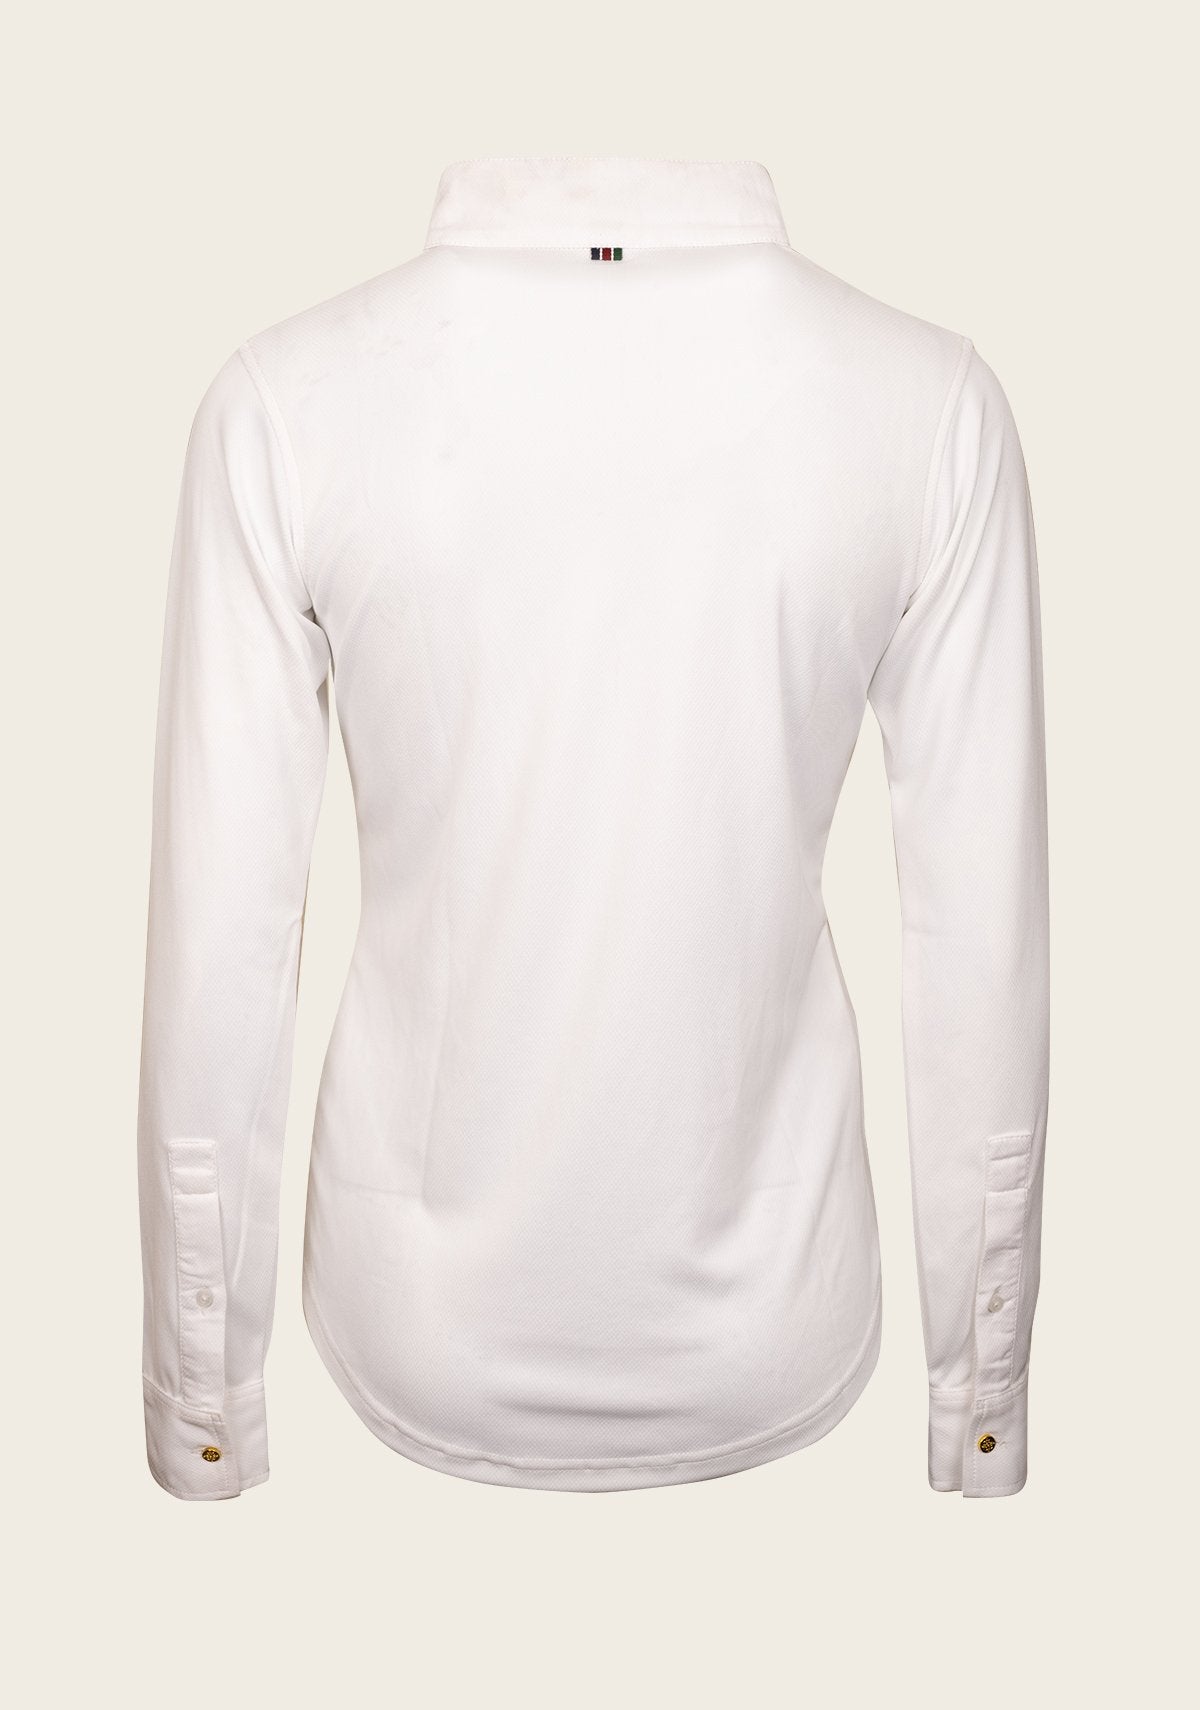 Espoir Show Shirt Long Sleeve Formal White